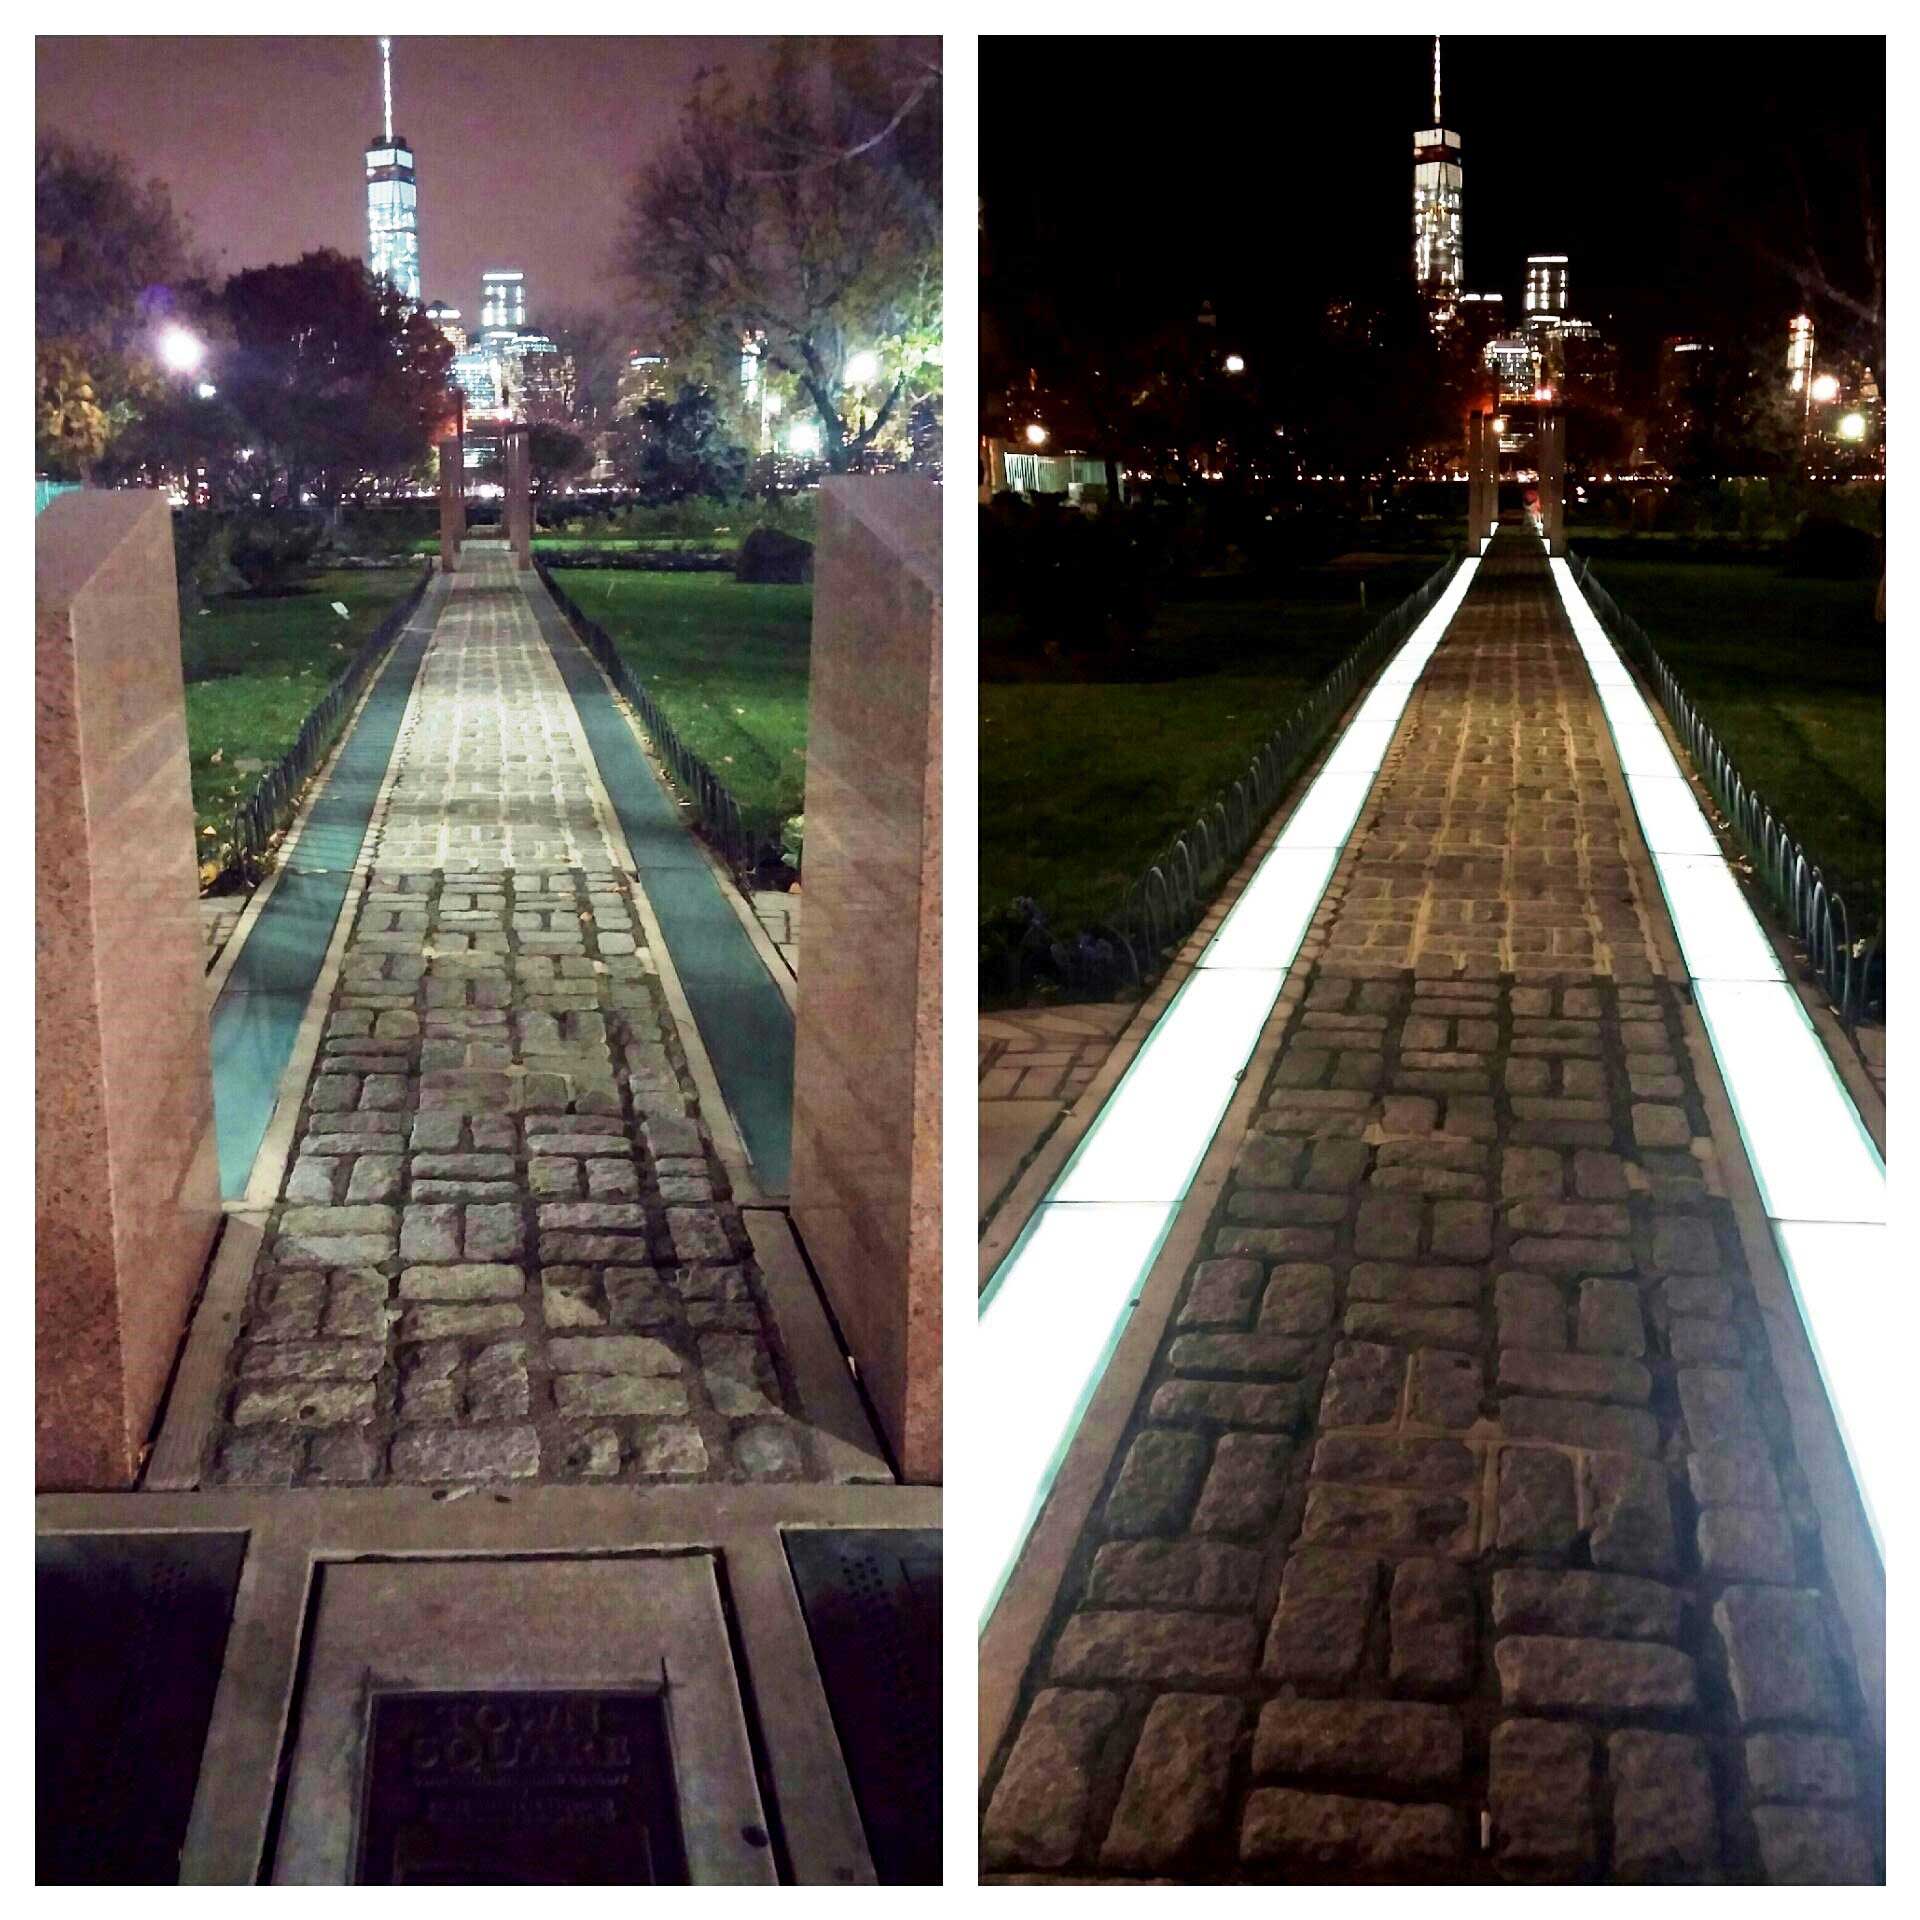 architectural memorial lighting in park   